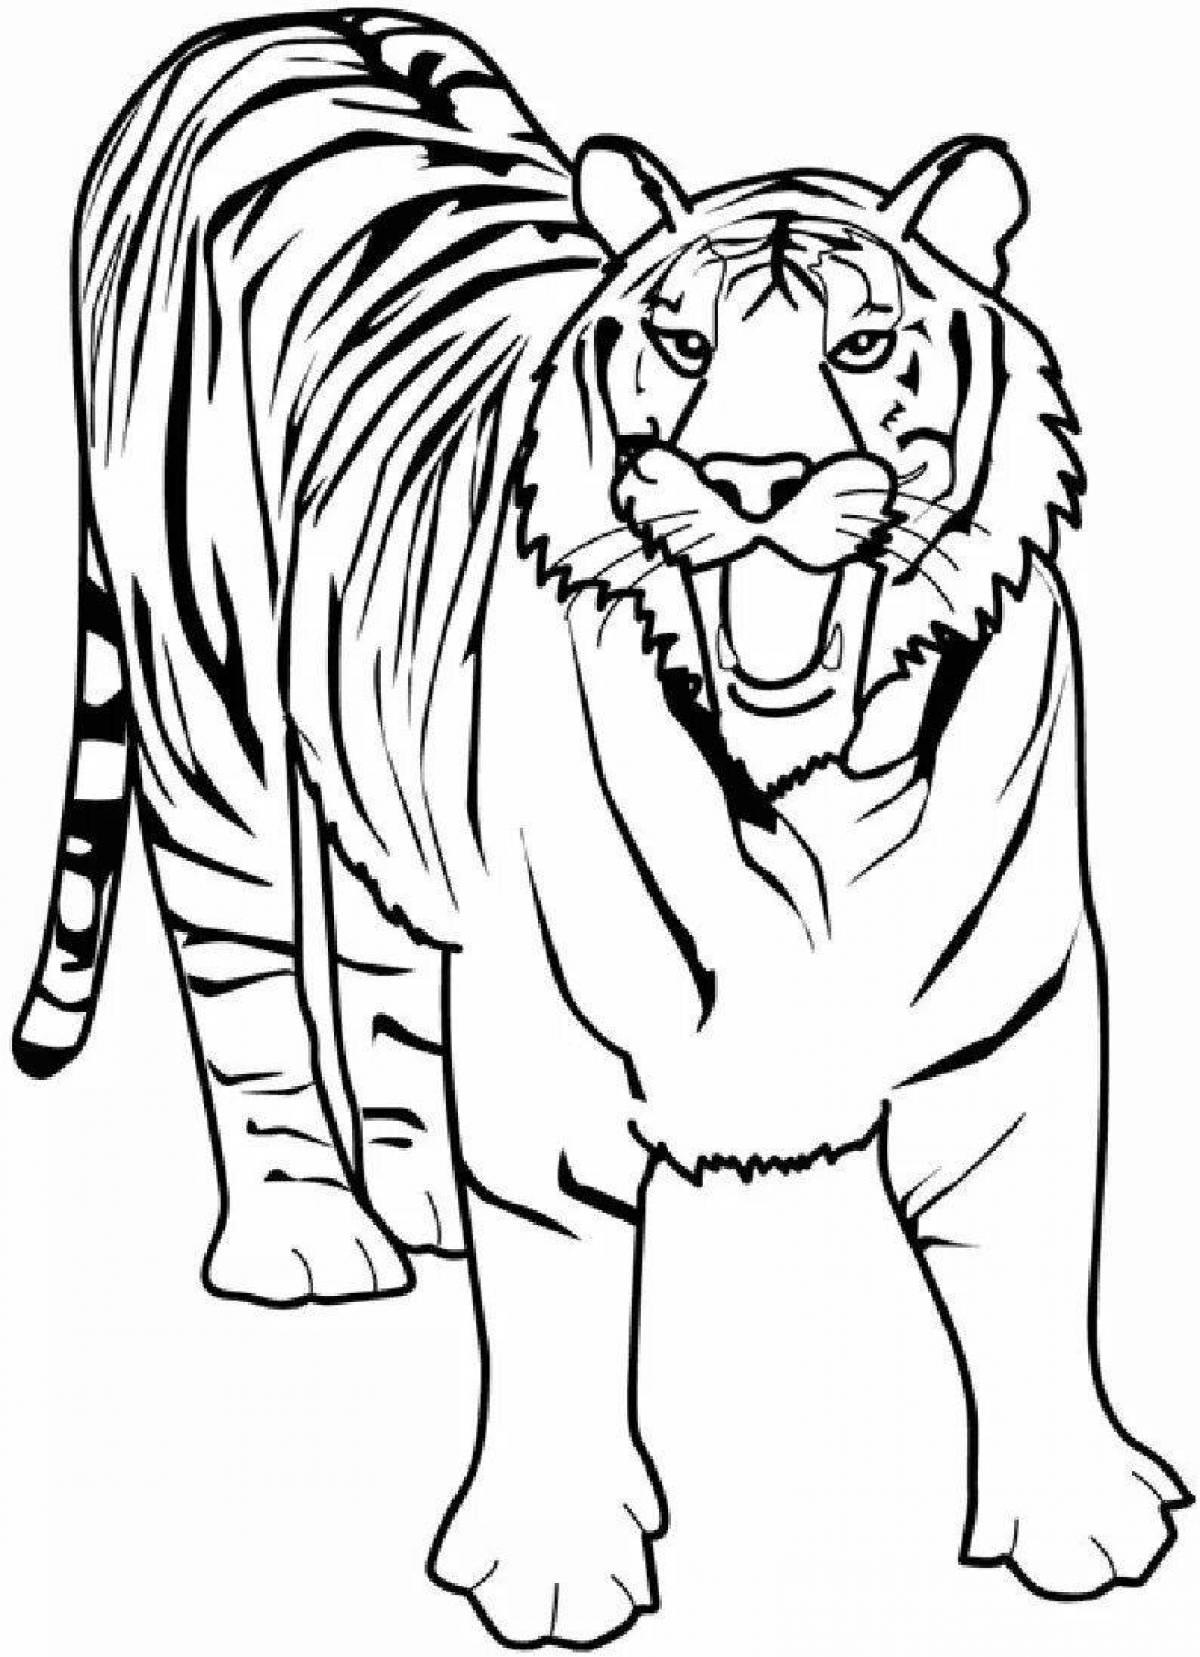 Ussuri tiger #9